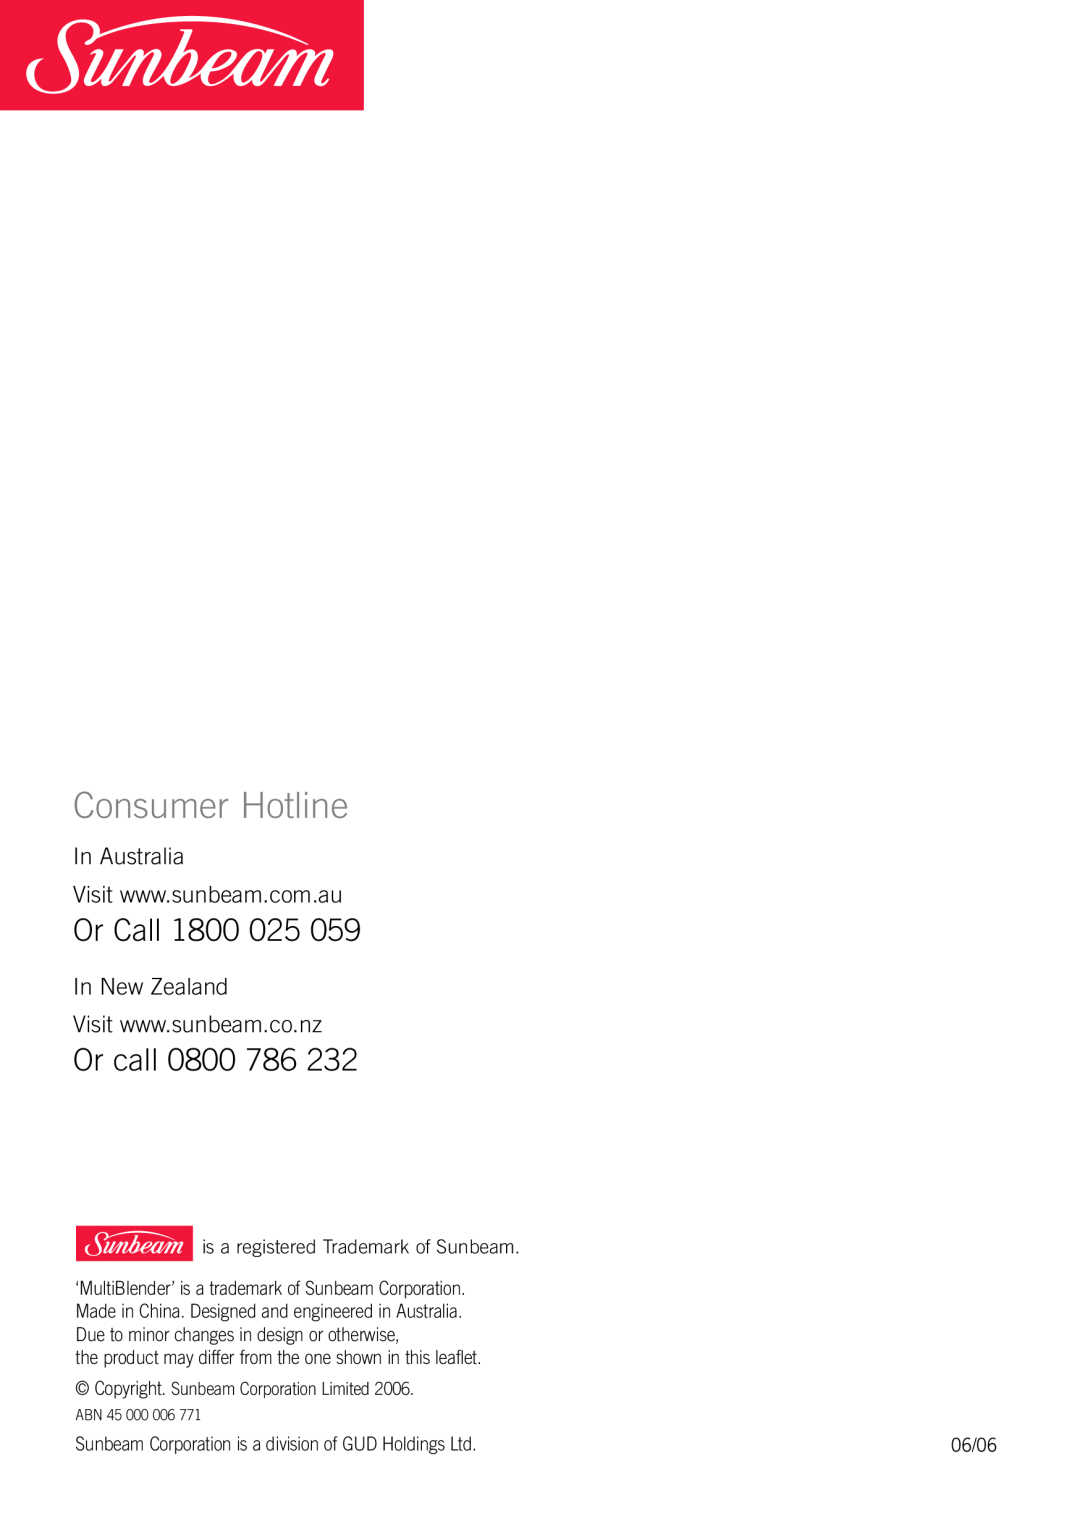 Sunbeam PB7950 manual Or Call, Or call, Consumer Hotline, is a registered Trademark of Sunbeam, 06/06 